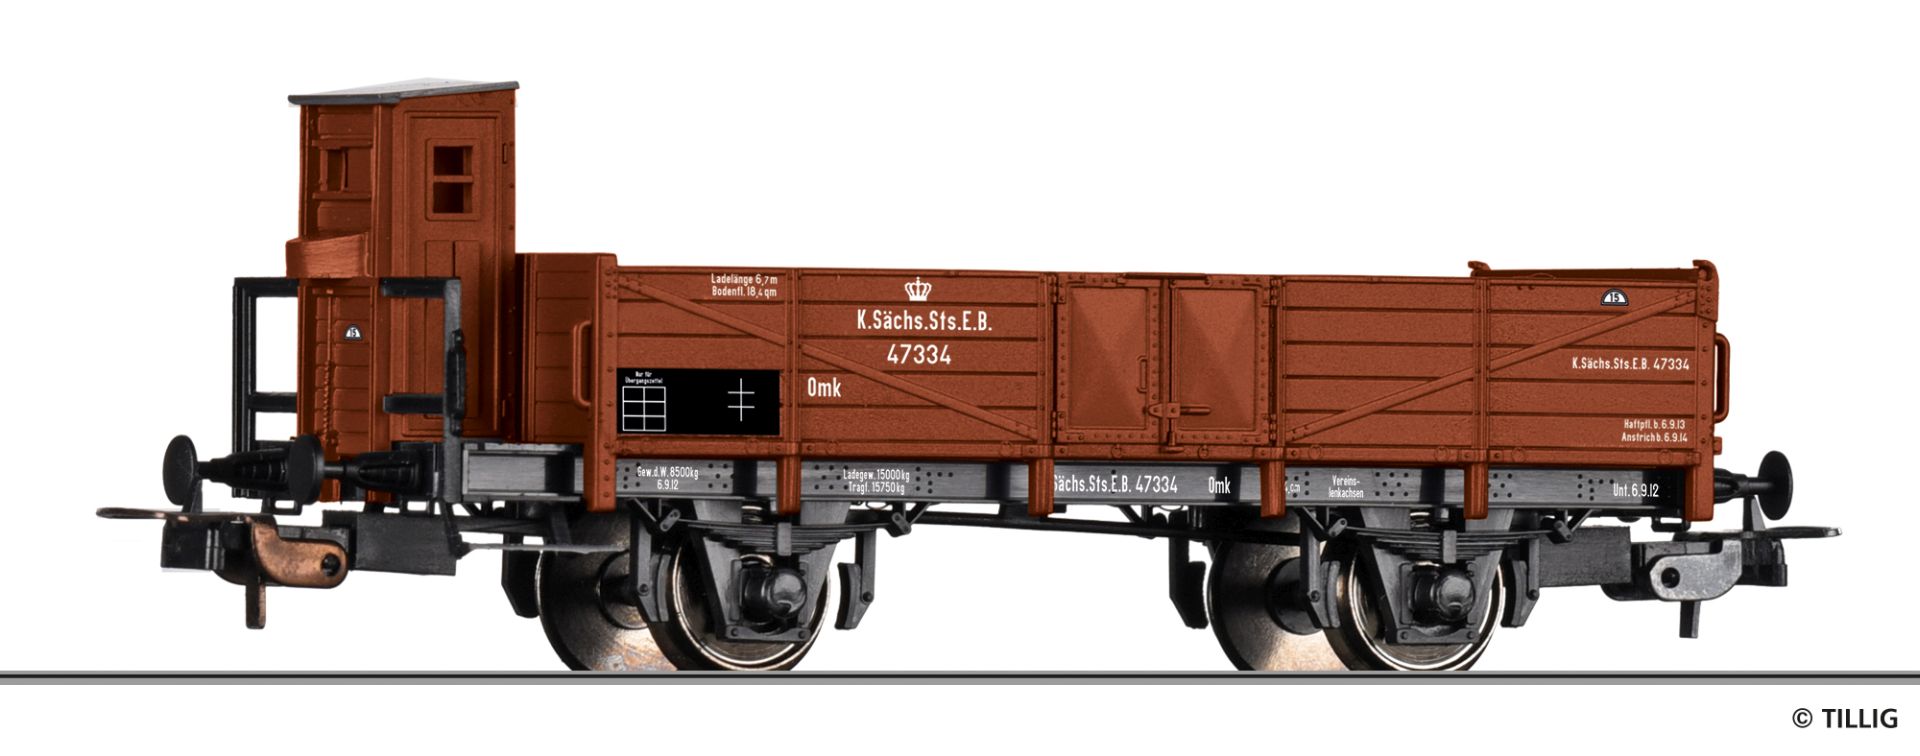 Tillig 77049 - Offener Güterwagen Omk, K.Sächs.Sts.E.B., Ep.I